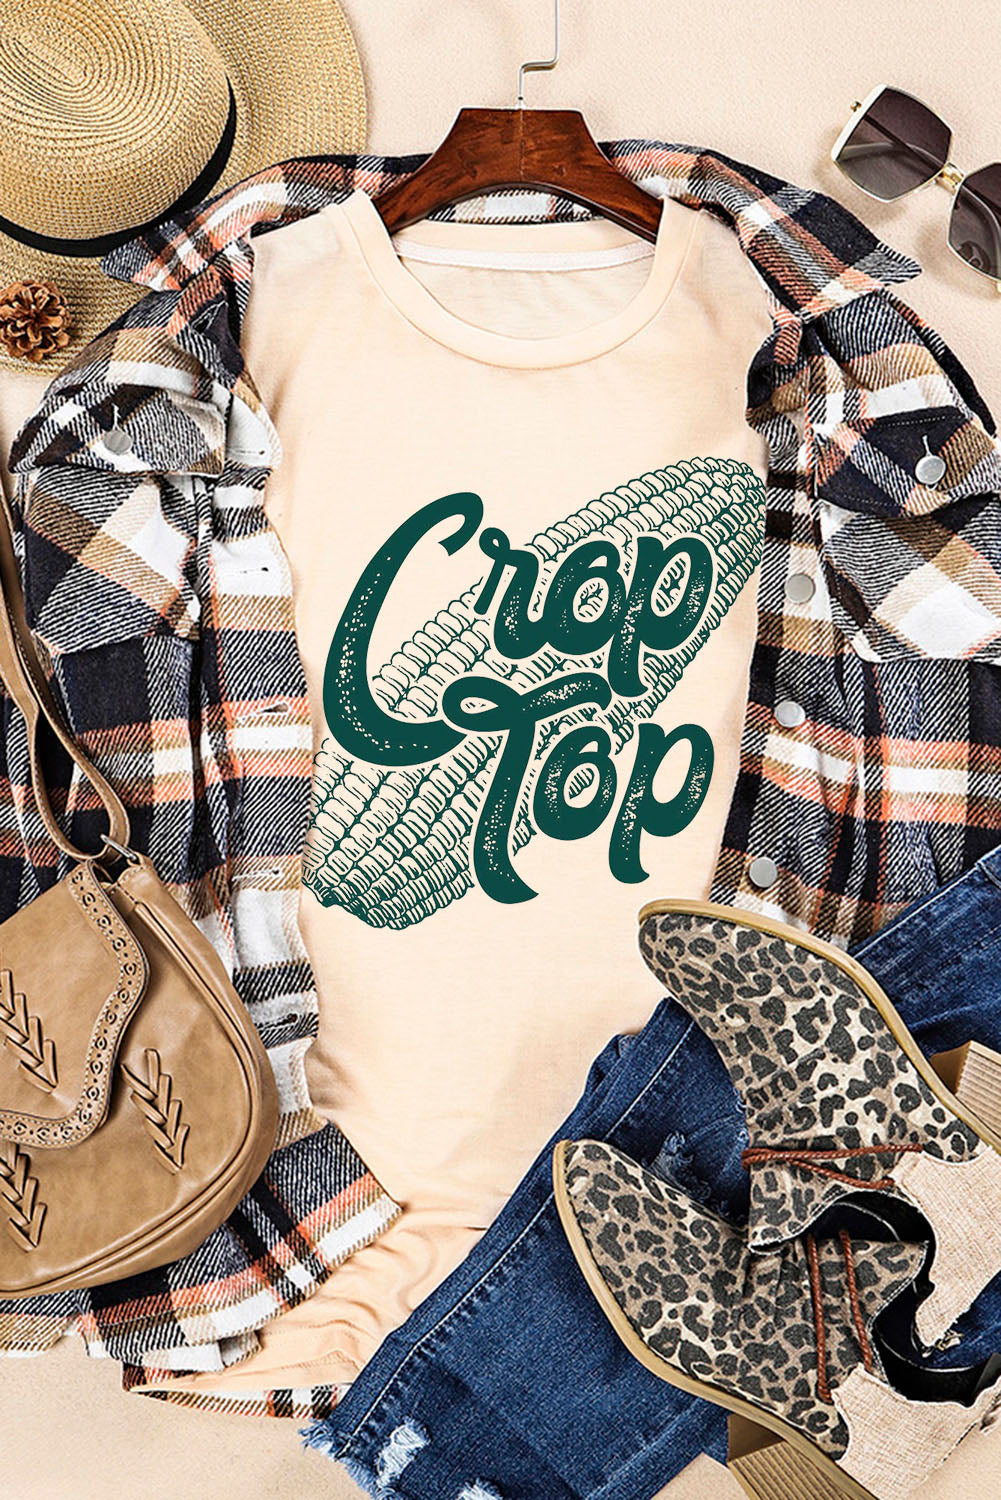 Khaki Corn Crop Top Graphic Tee